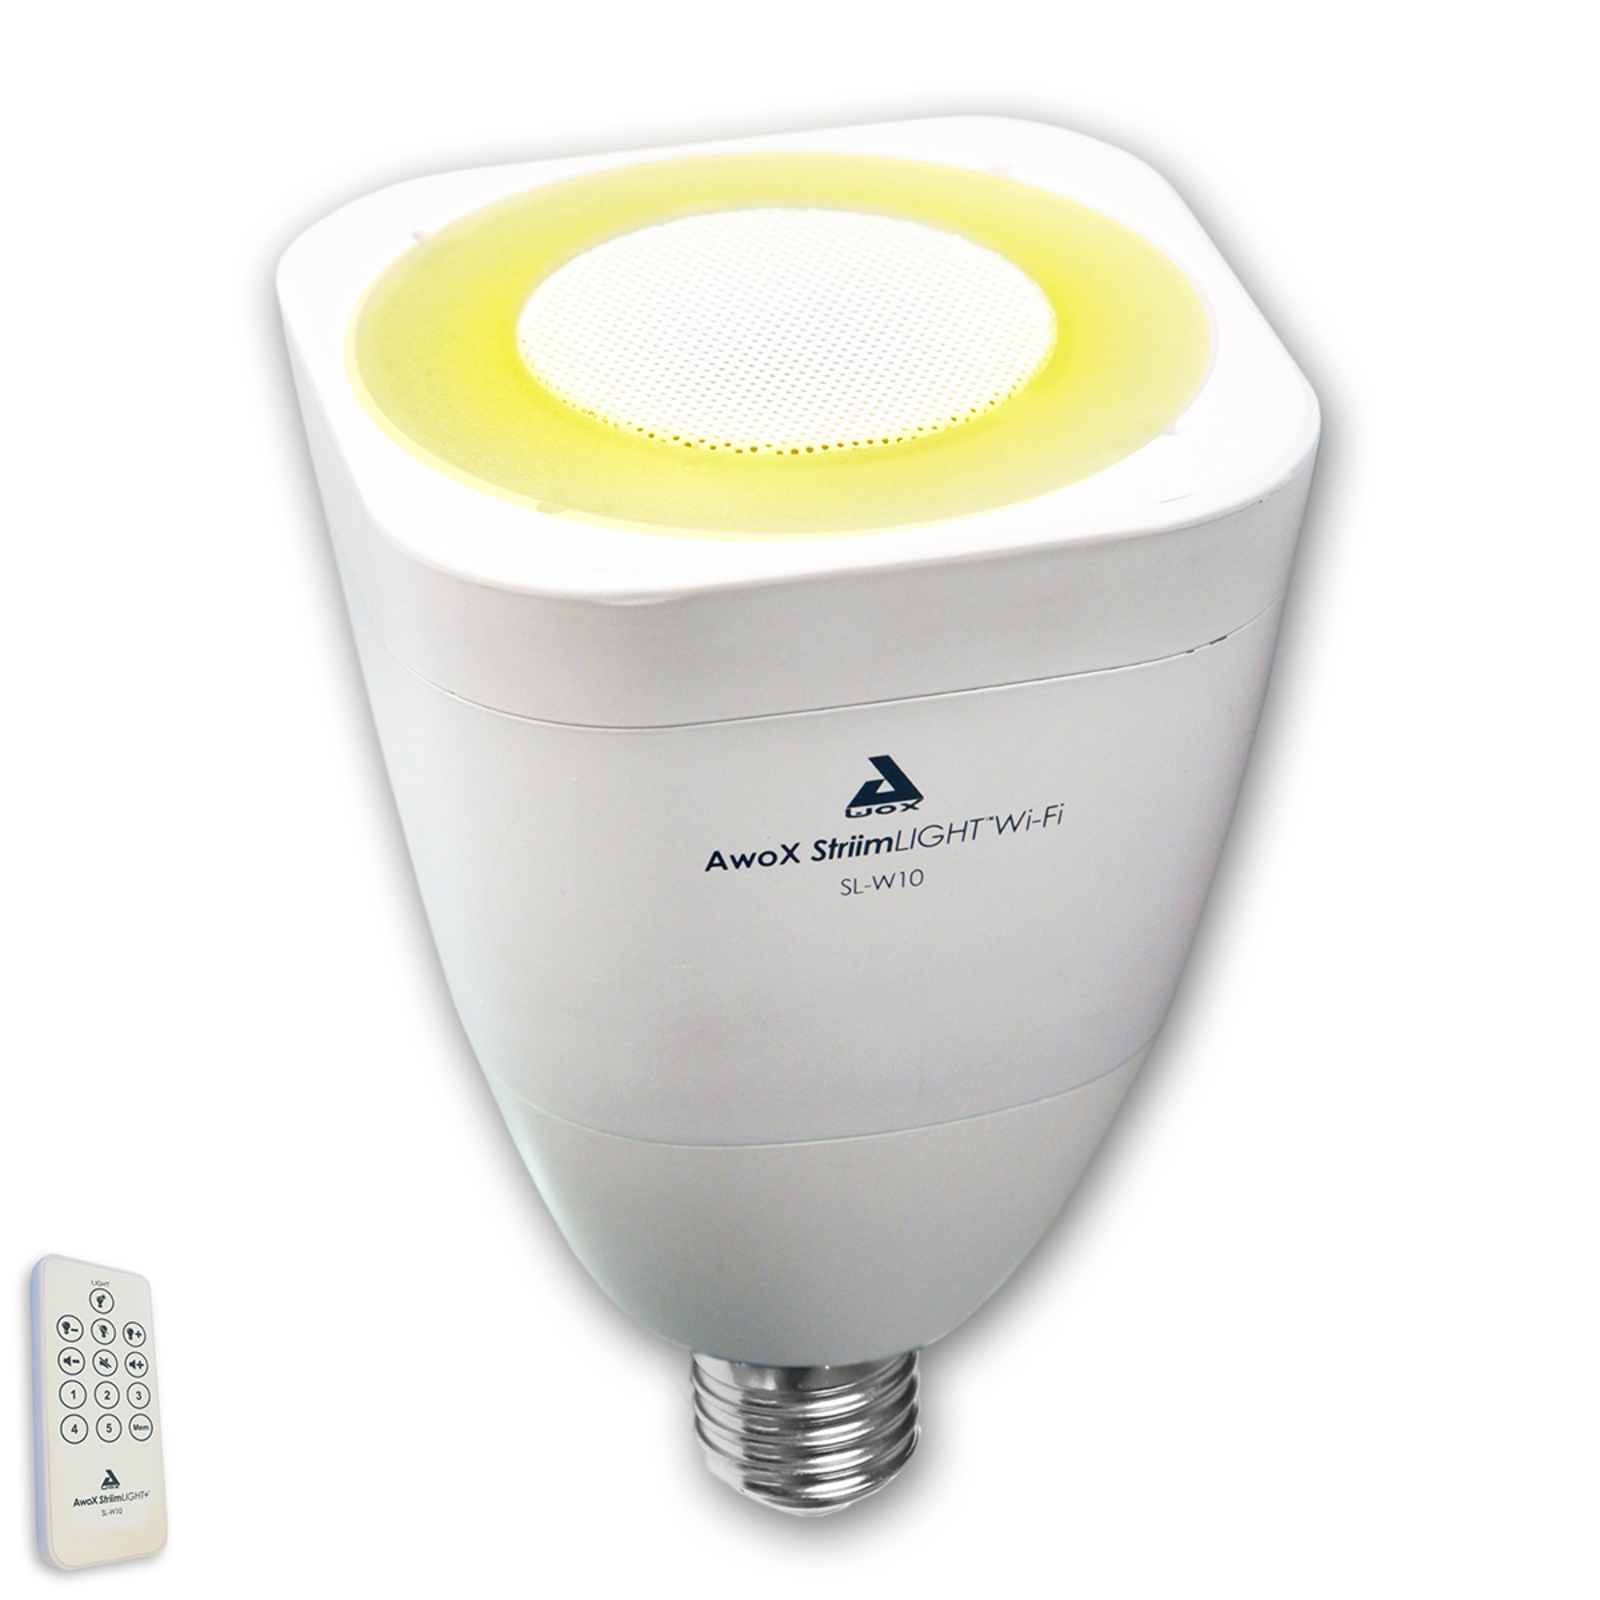 AwoX StriimLIGHT WiFi-White LED-pære E27, 7 W